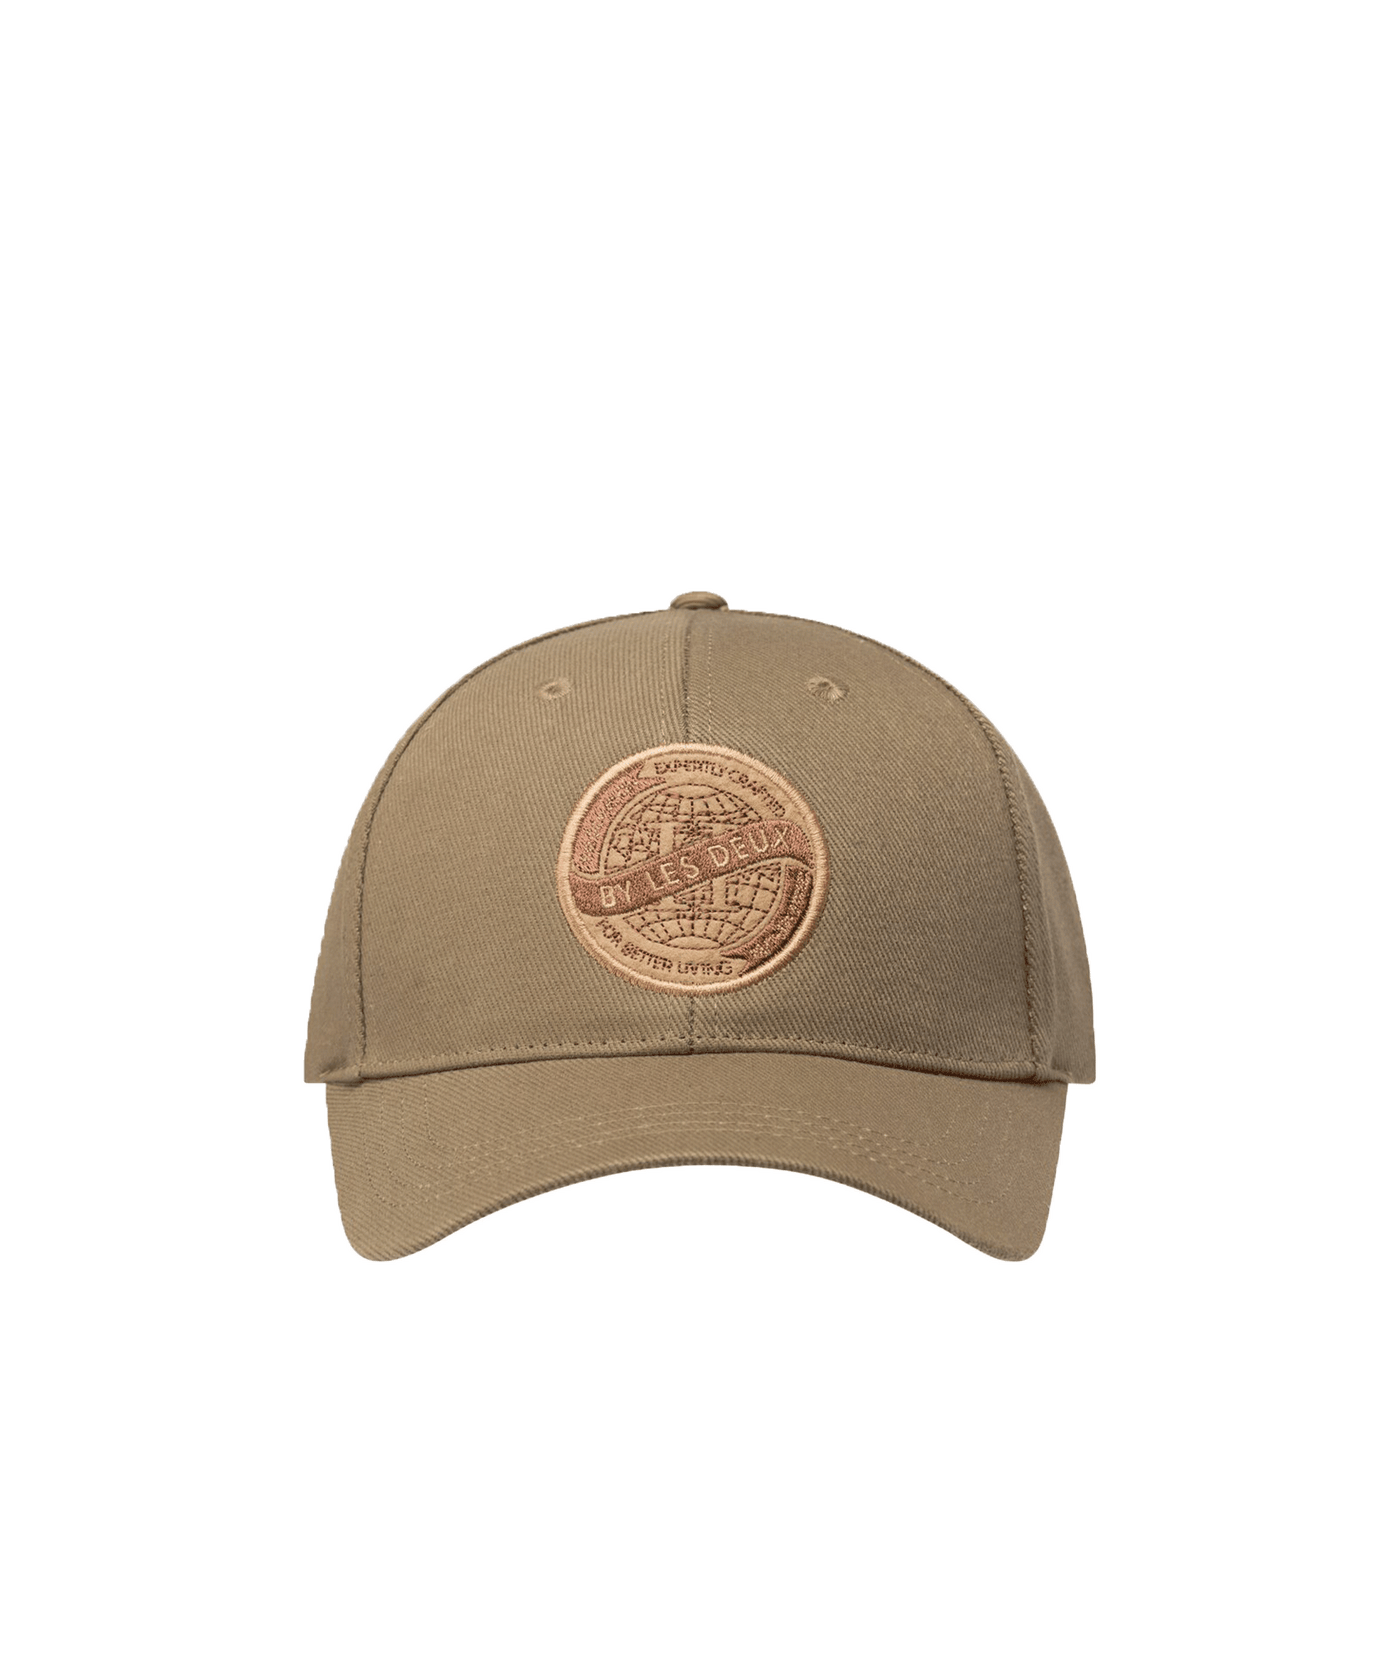 Les Deux - Ldm702085 - Globe Baseball Cap - Surplus Green